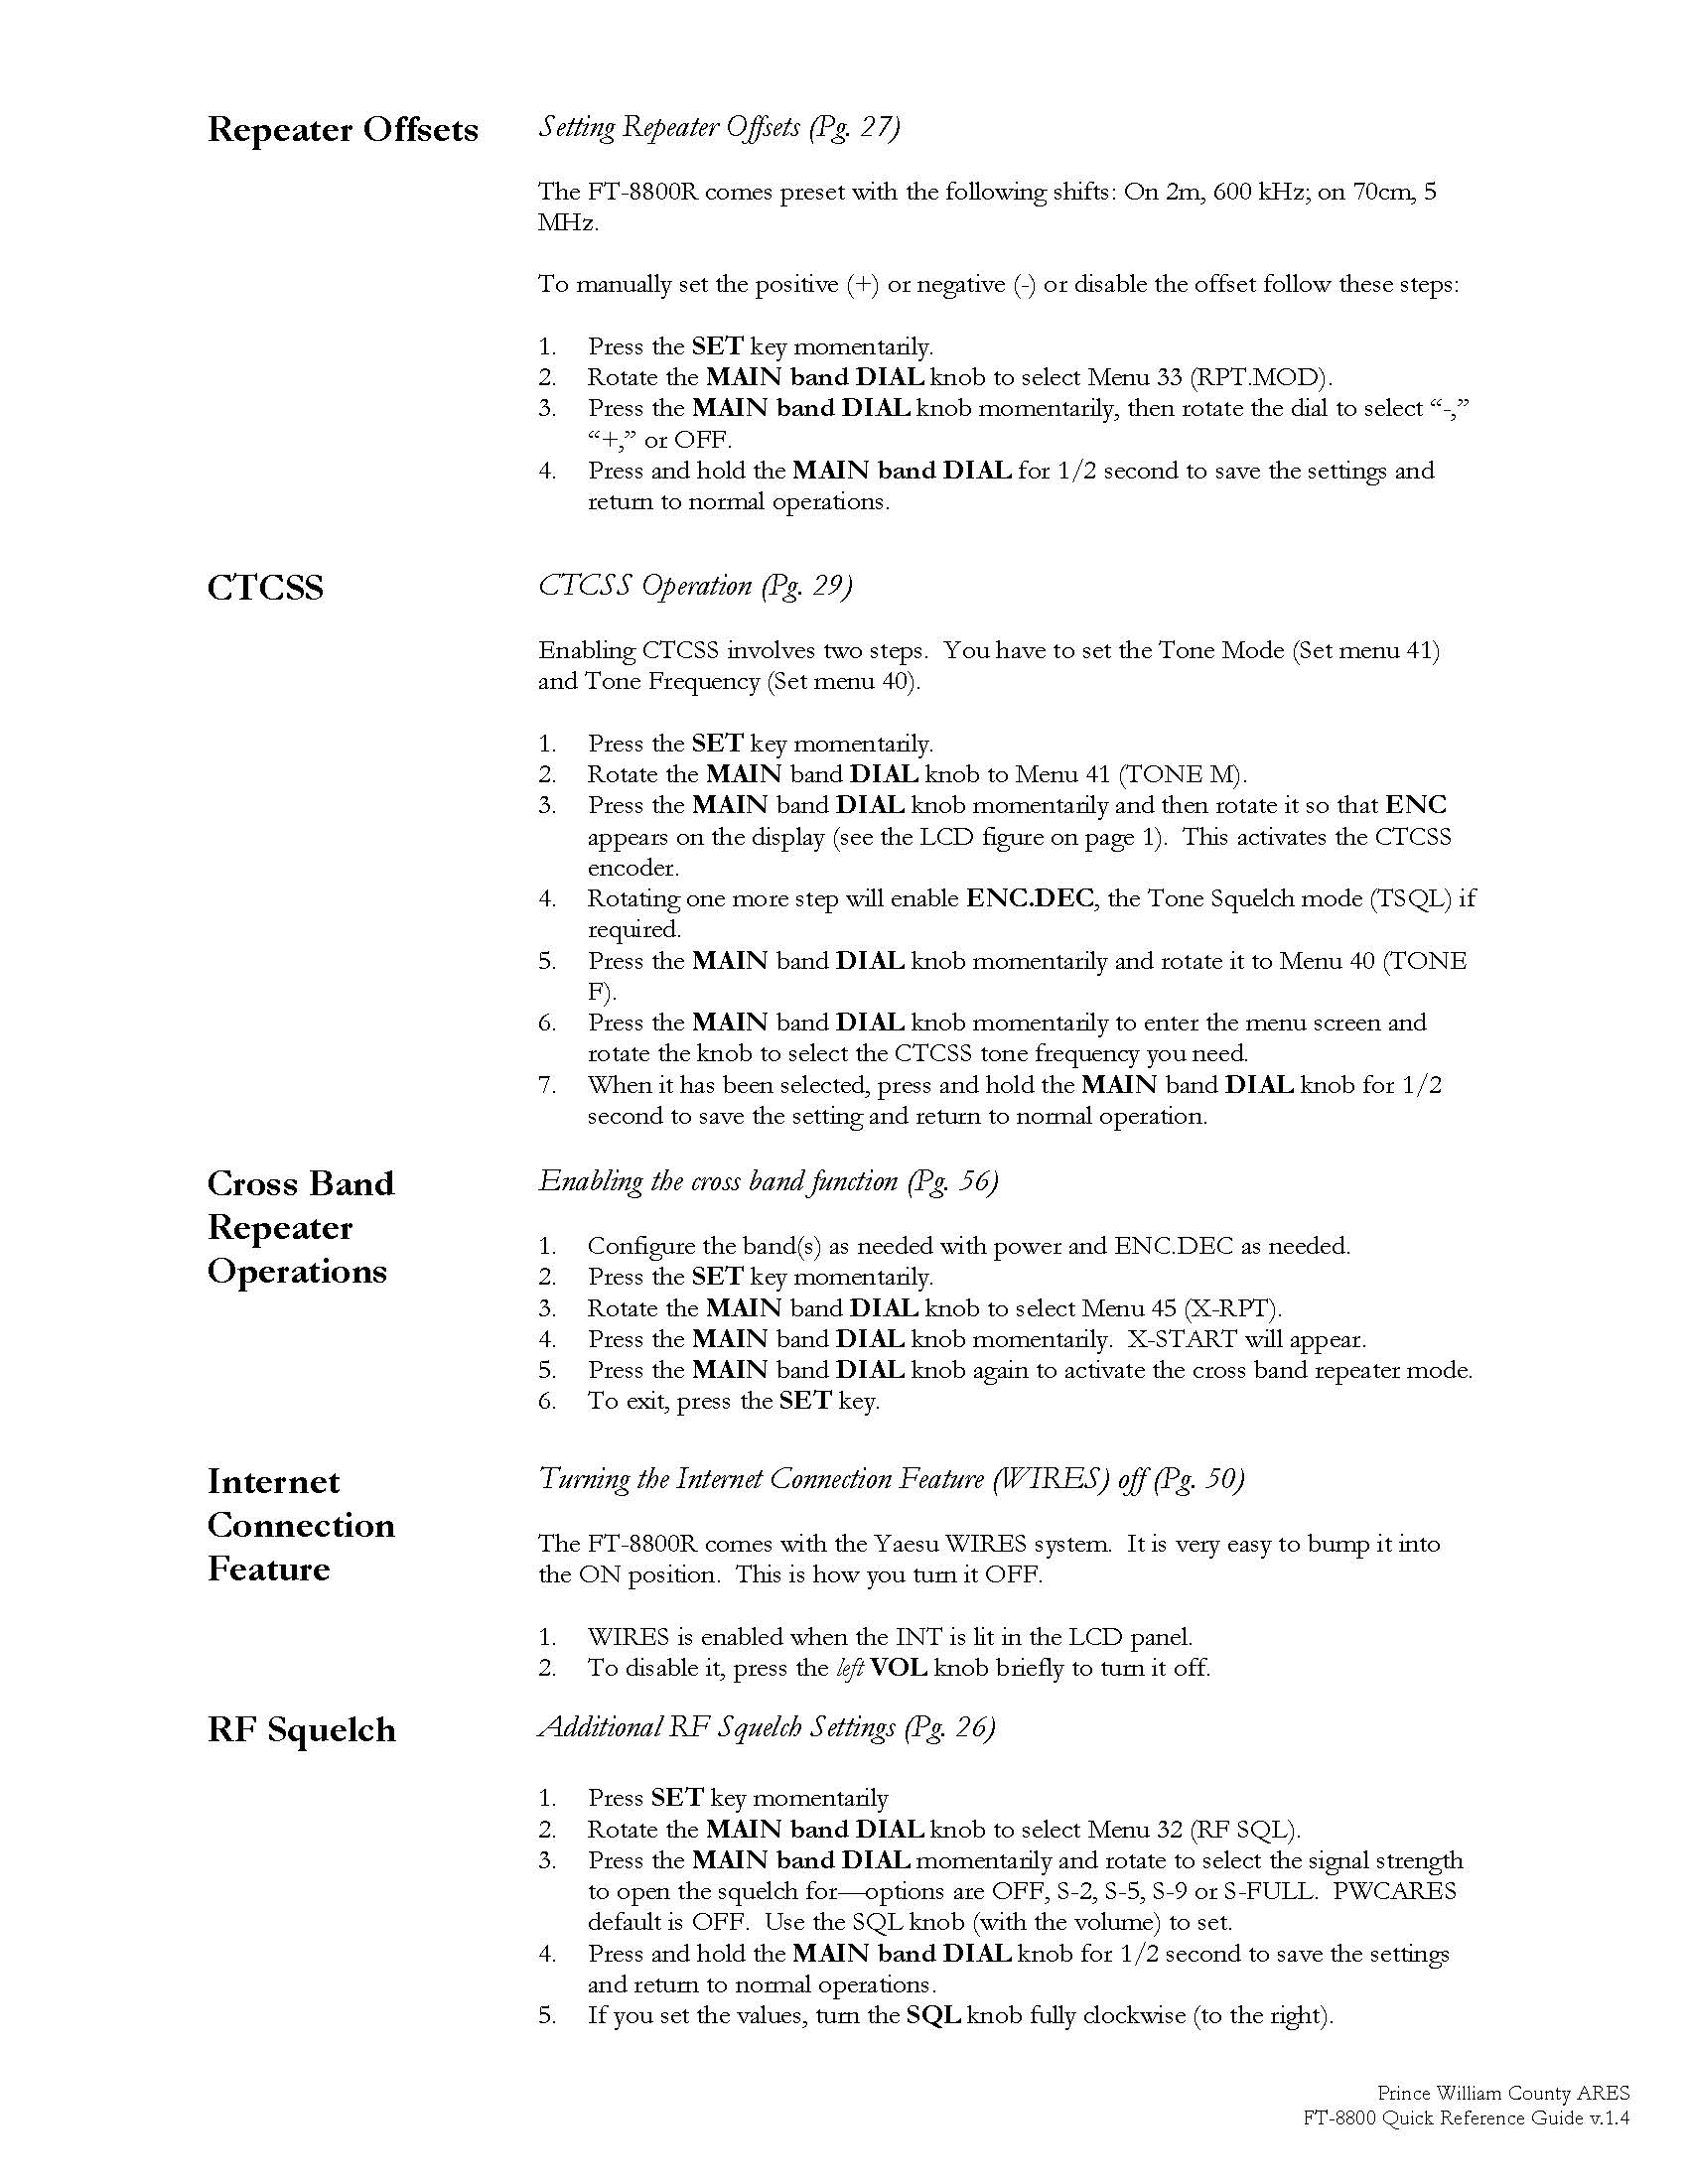 FT-8800 QRC Page 4